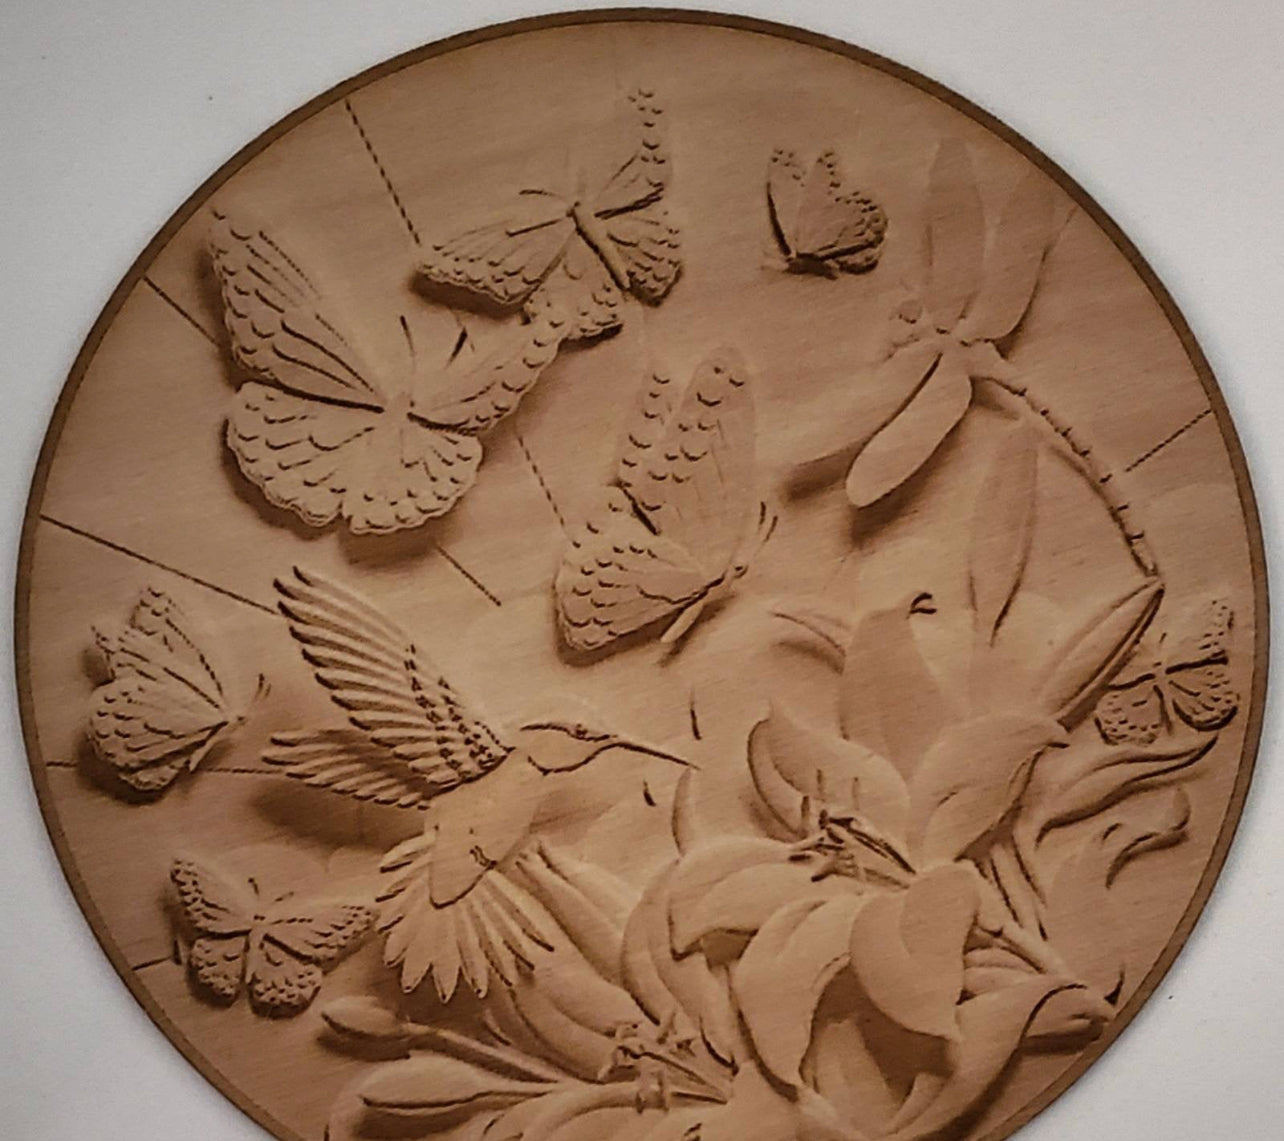 Hummingbird Round, Wood Engraved